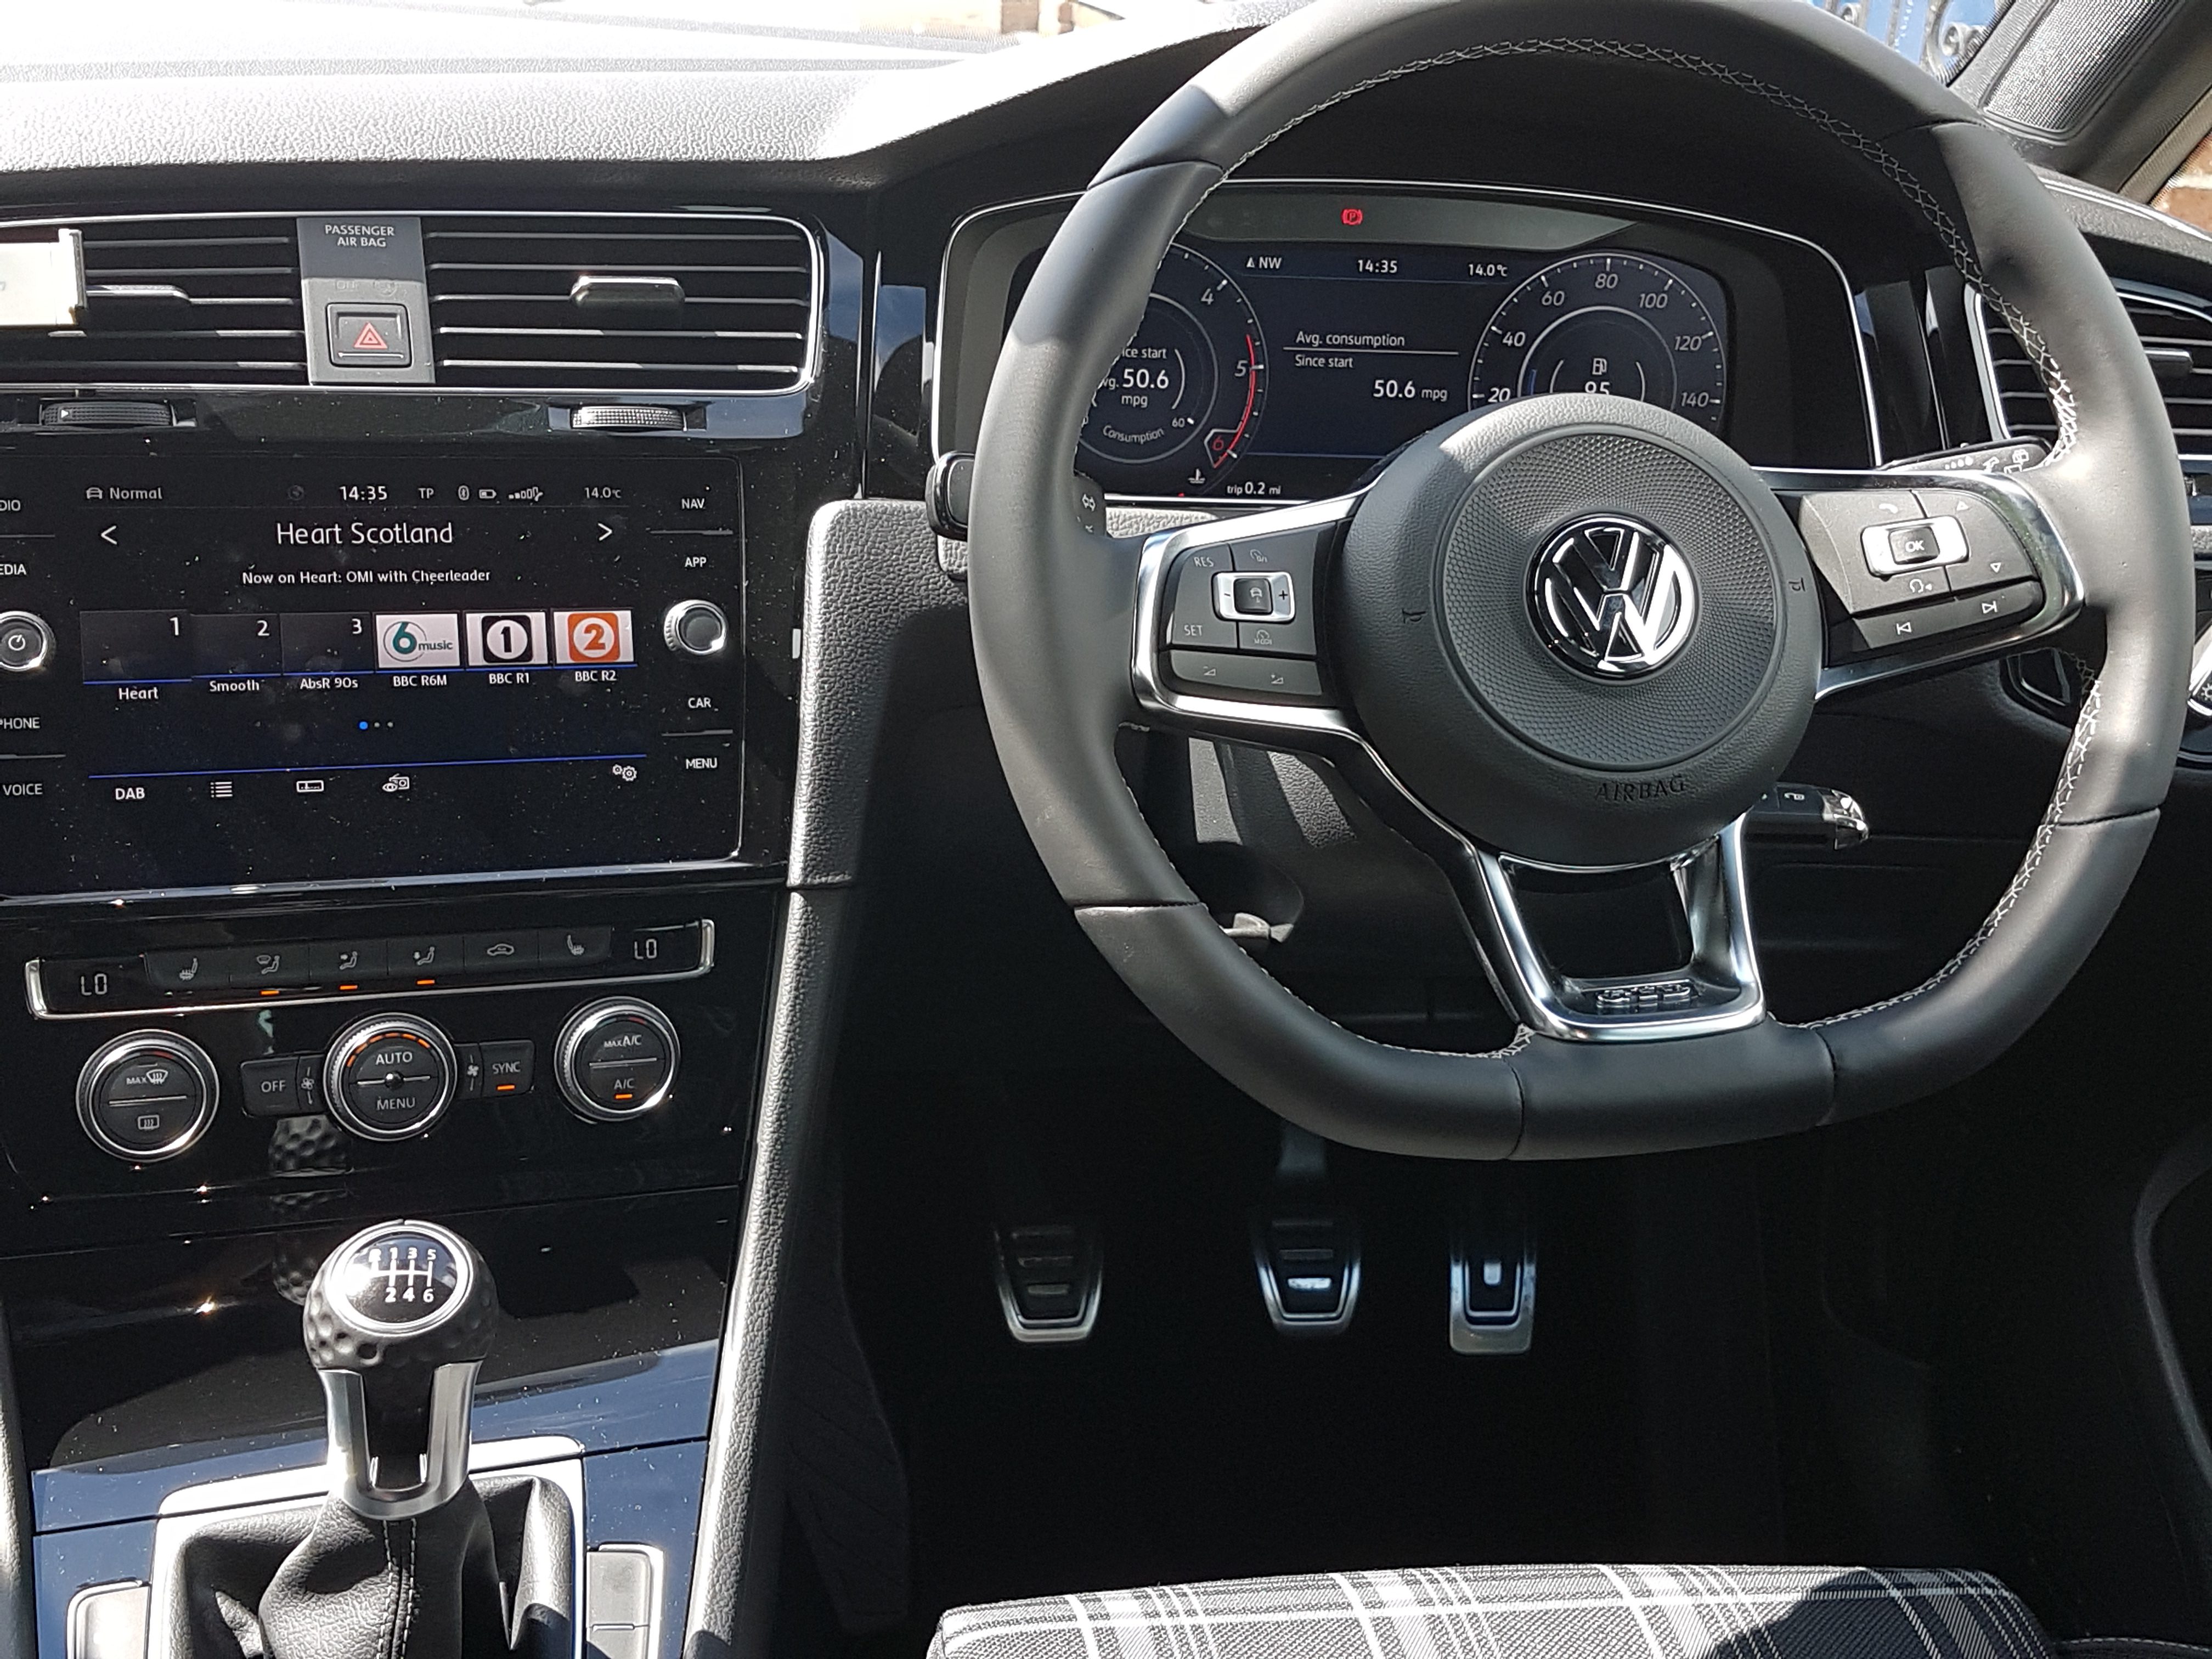 Volkswagen GOLF DIESEL HATCHBACK 2.0 TDI 184 GTD 5dr Manual Car leasing Select Options